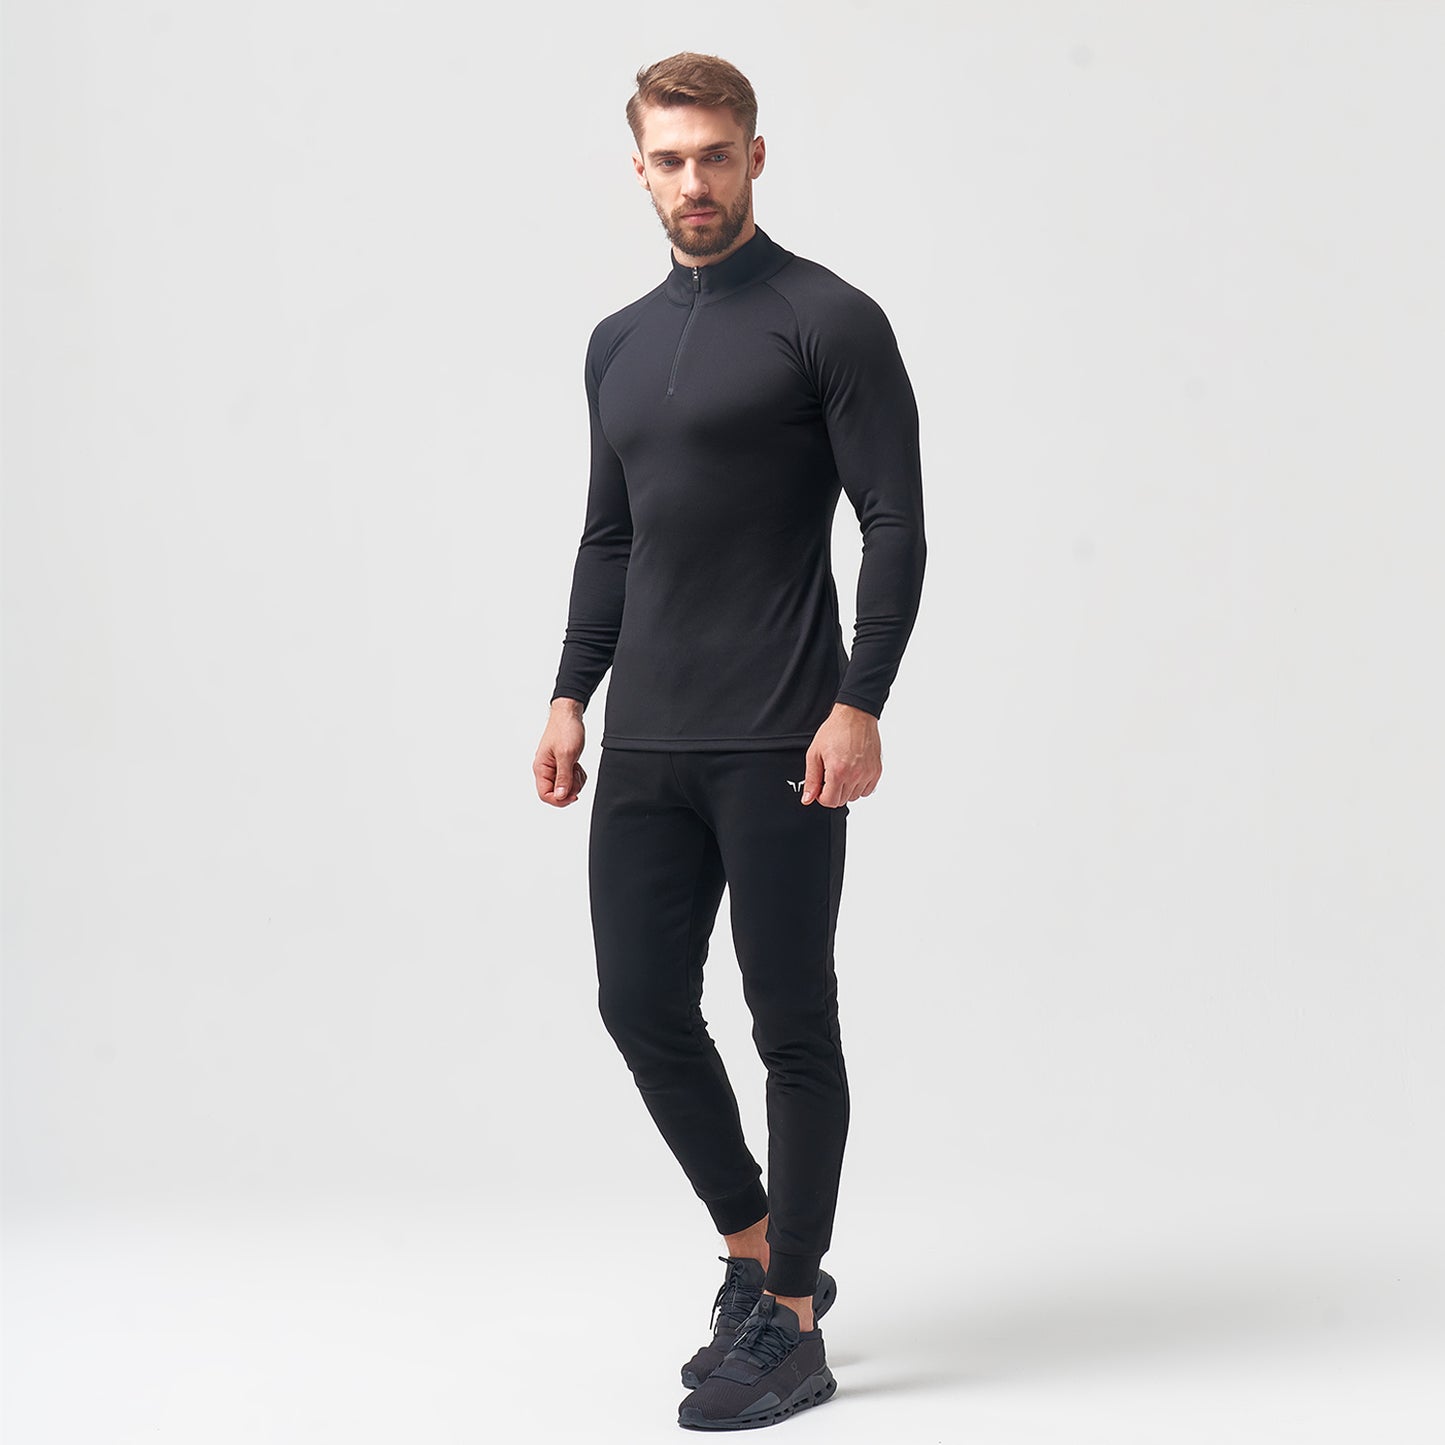 squatwolf-gym-long-sleeves-code-urban-running-top-black-running-tops-for-men